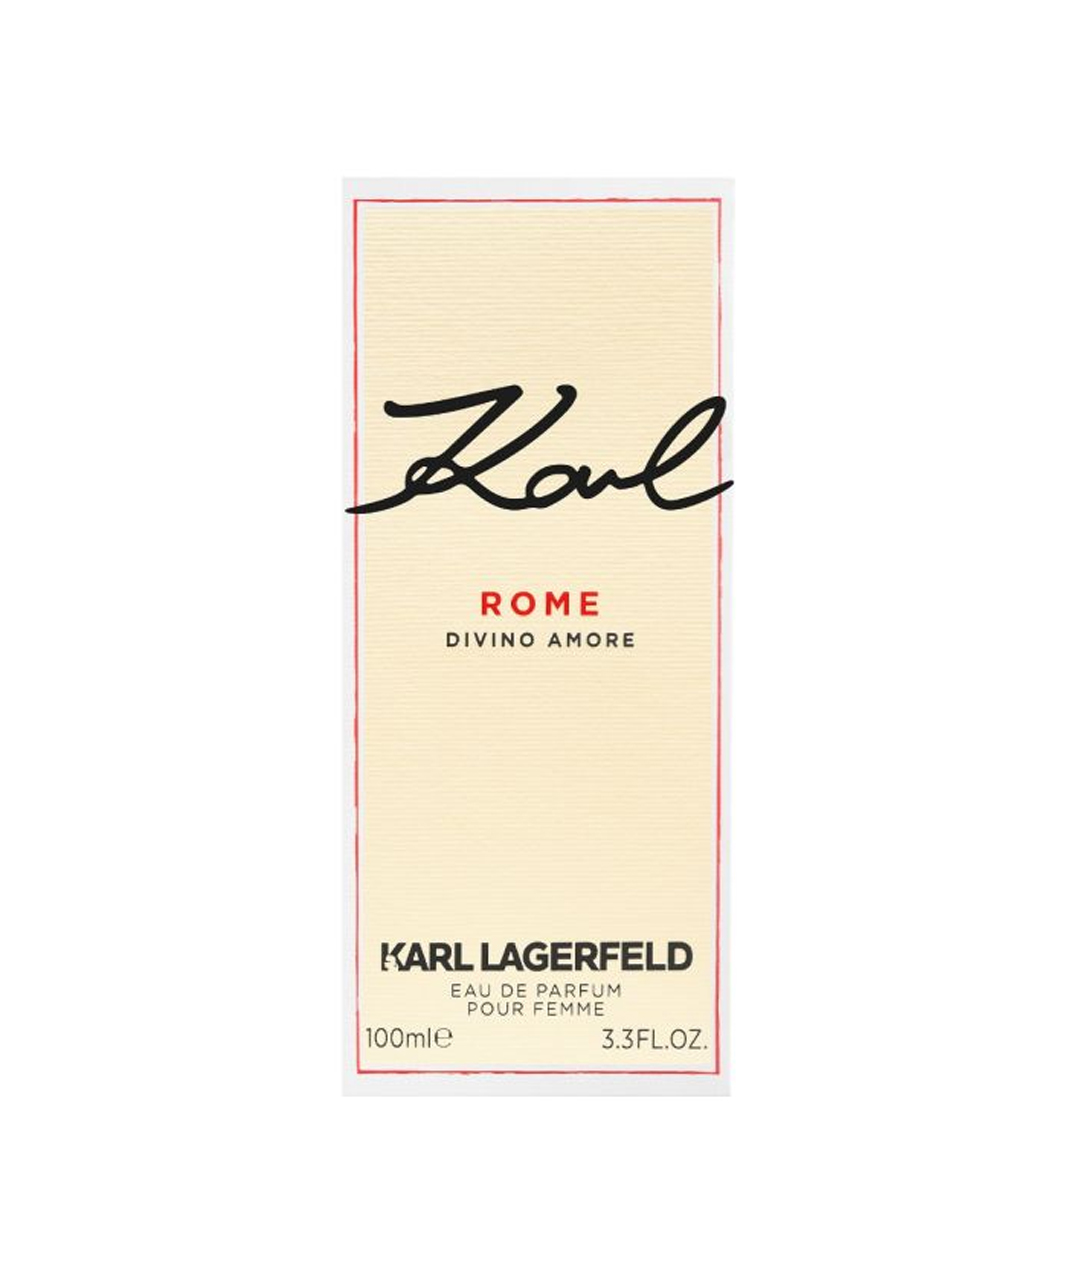 Парфюм «Karl Lagerfeld» Divino Amore Rome, женский, 100 мл